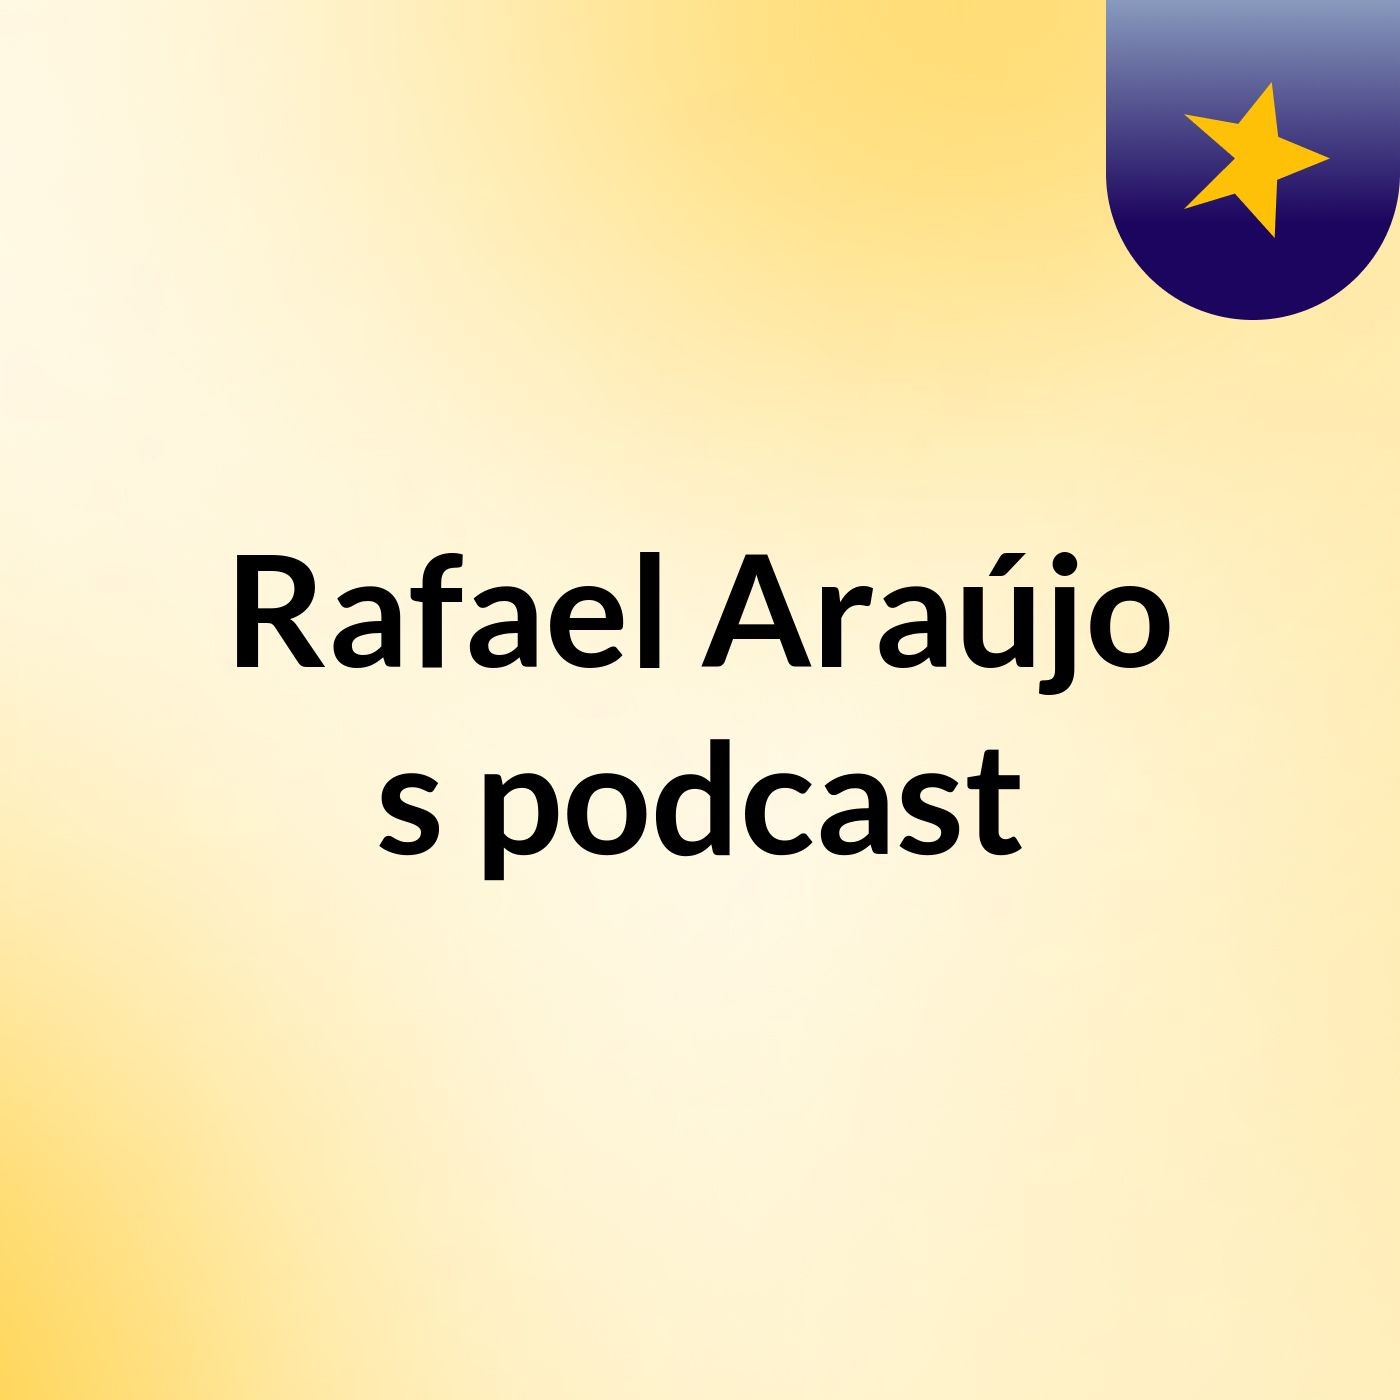 Rafael Araújo's podcast